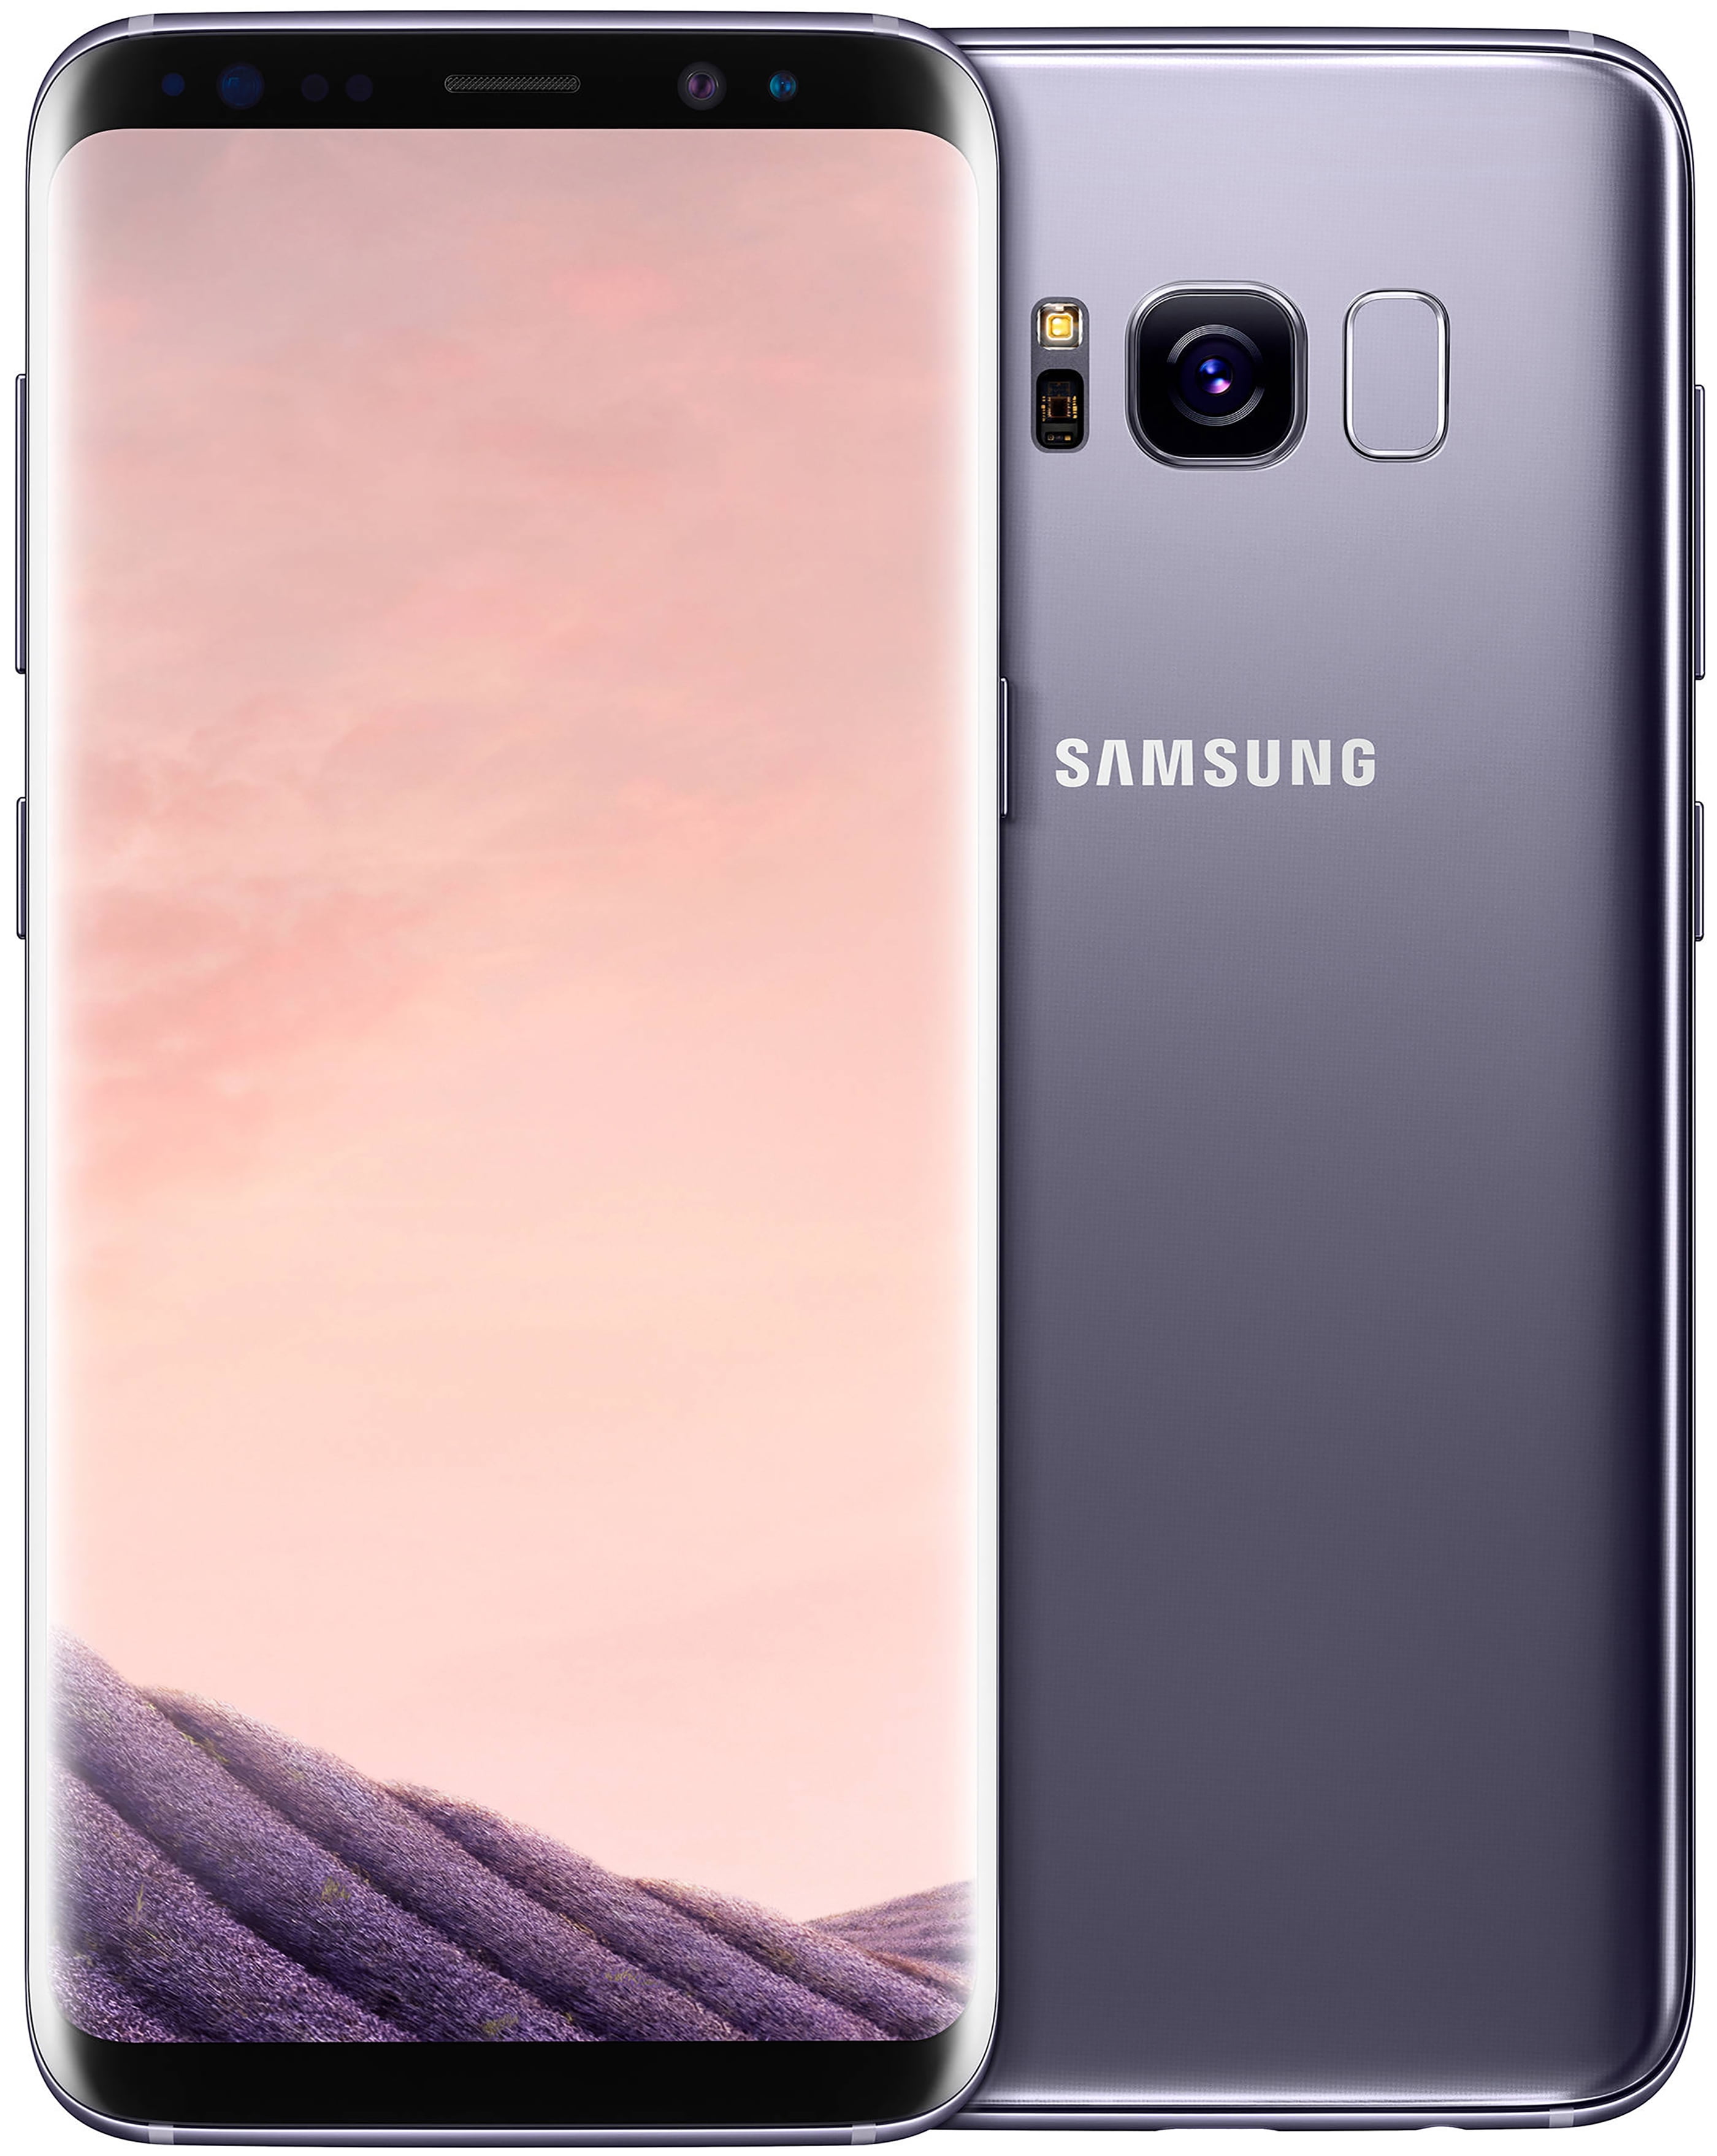 dictator zuur escaleren Samsung Galaxy S8 G950F 64GB Unlocked GSM Phone w/ 12MP Camera - Orchid  Gray - Walmart.com